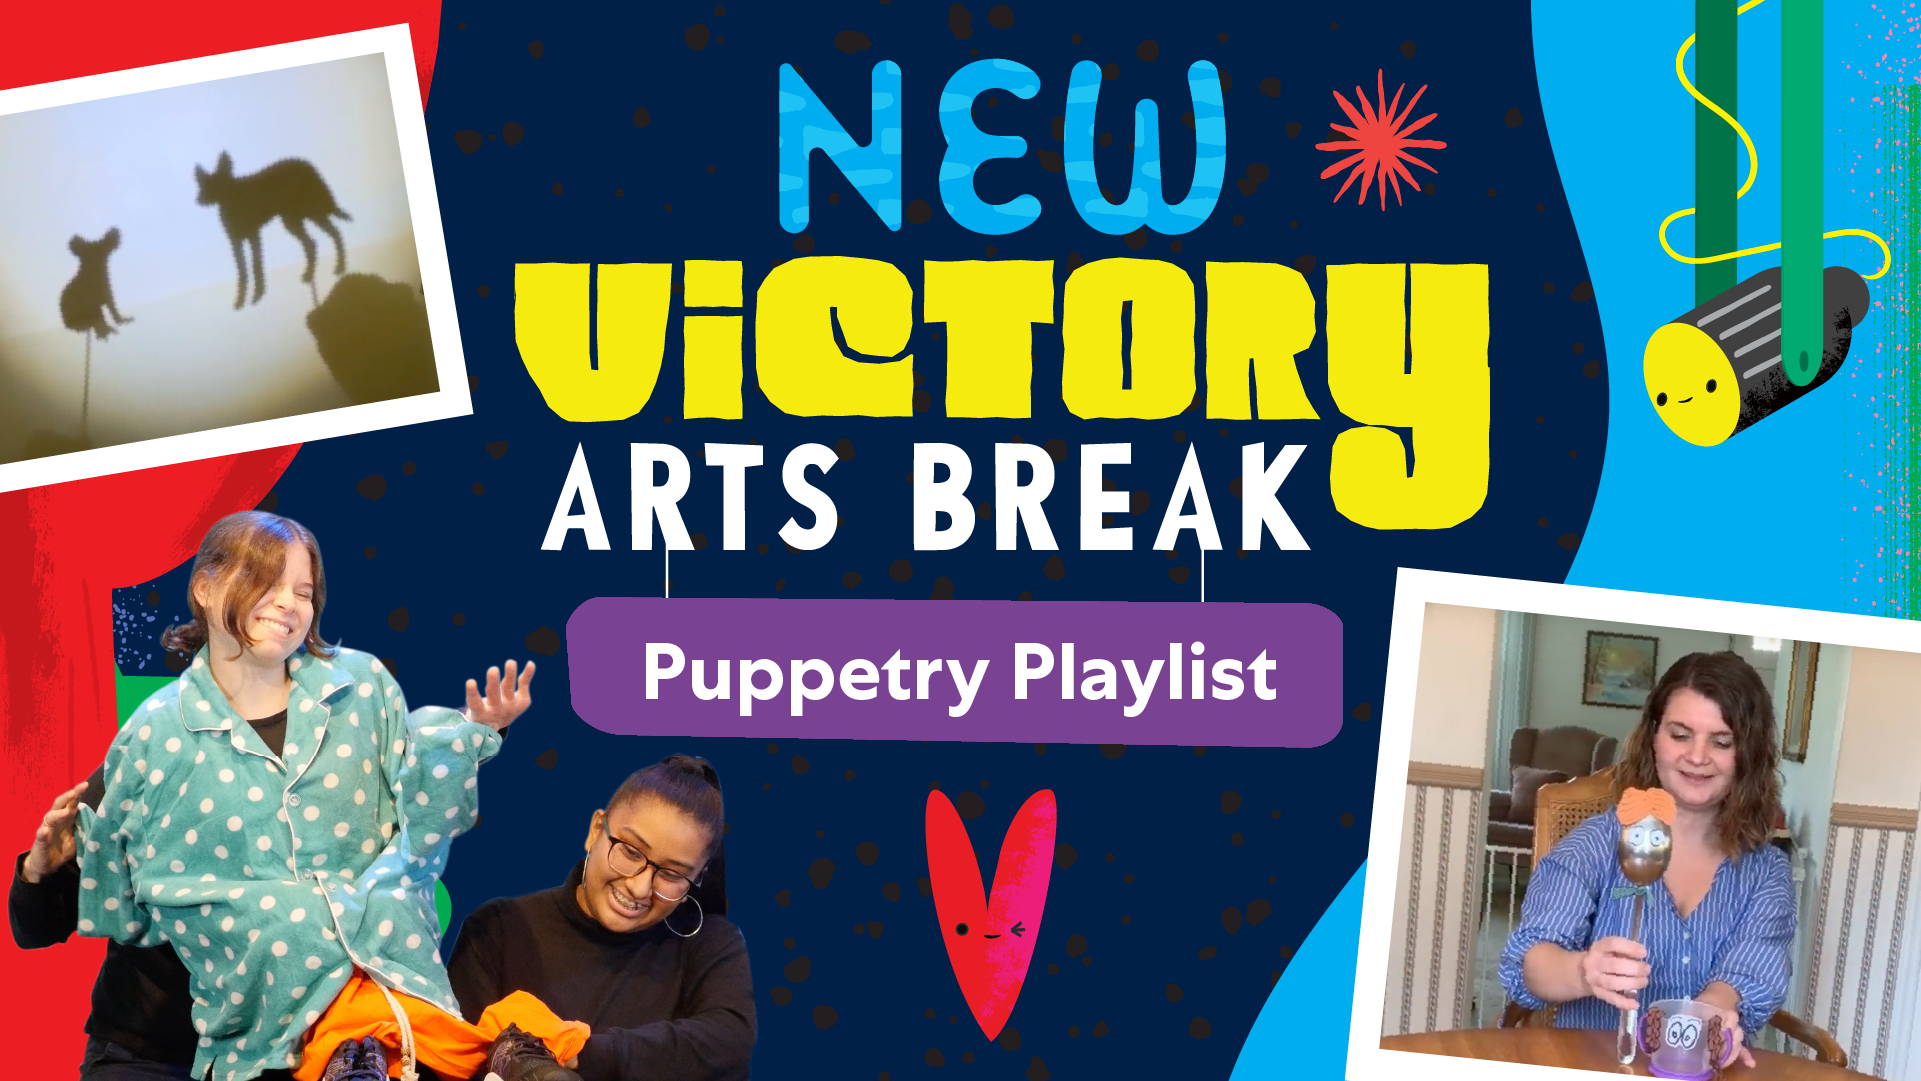 New Victory Arts Break: Puppetry Playlist